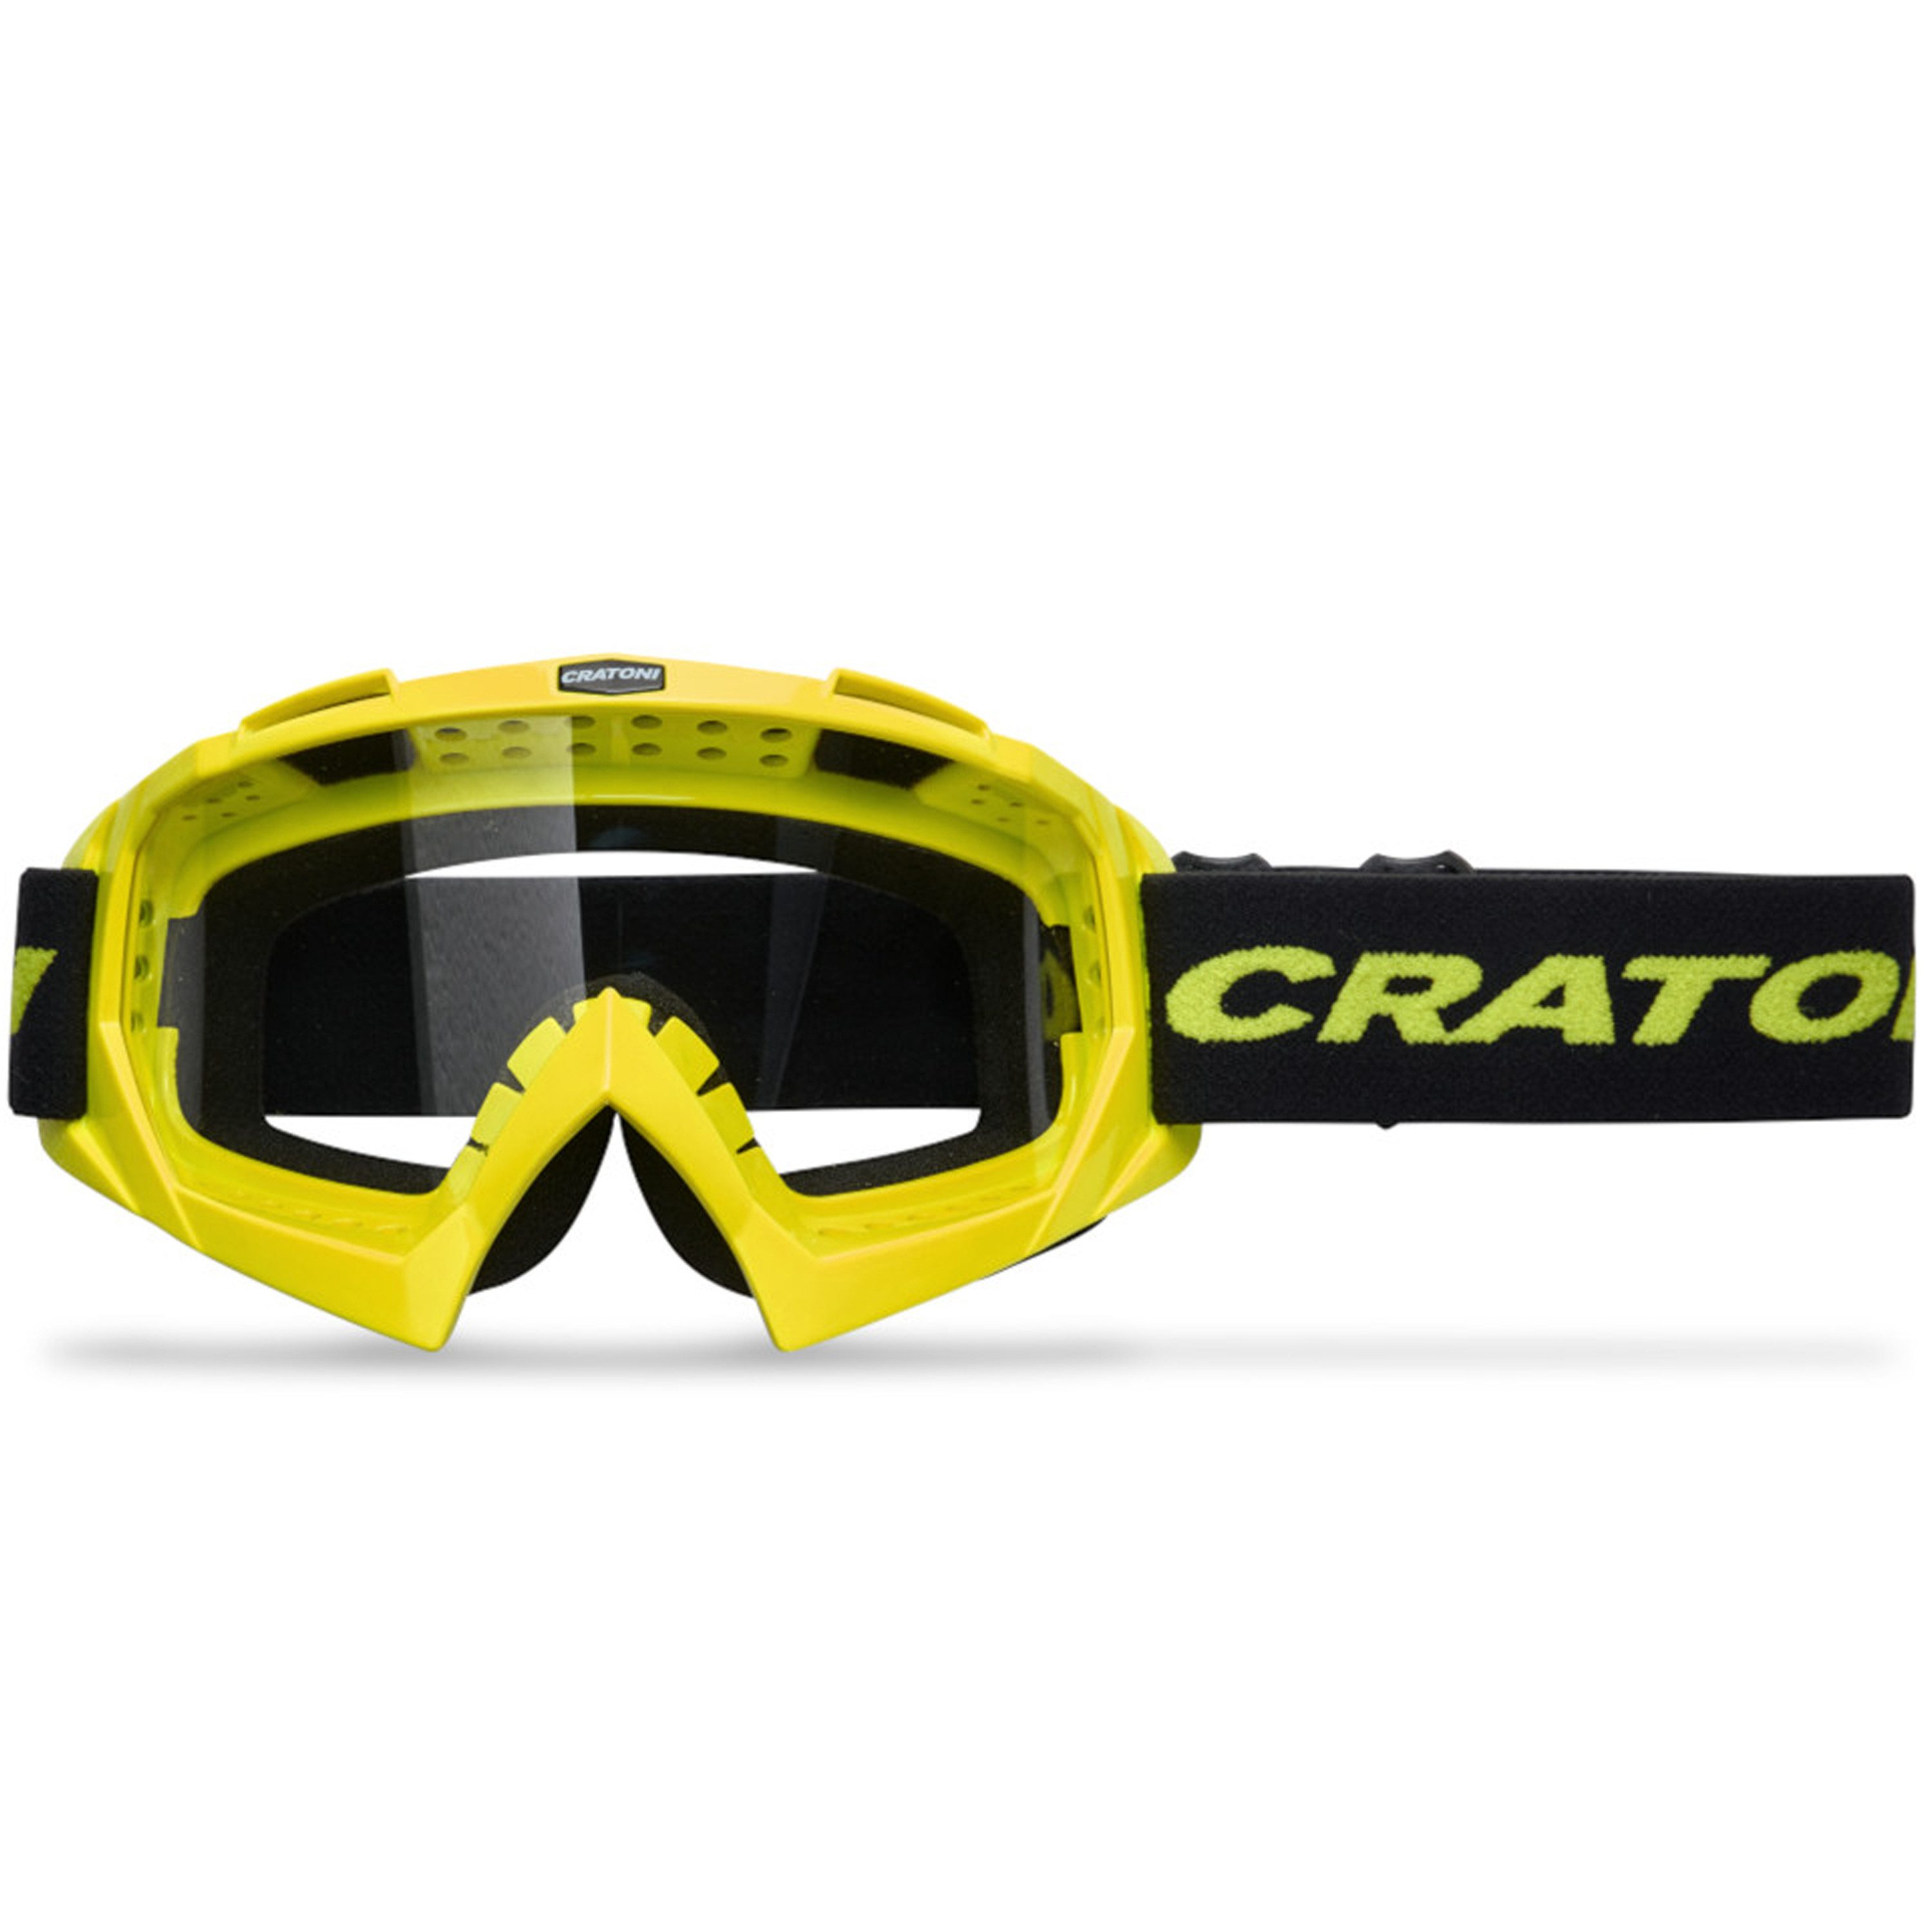 Cratoni Fahrradbrille C-Rage Mountainbike-Brille Sportbrille Goggle